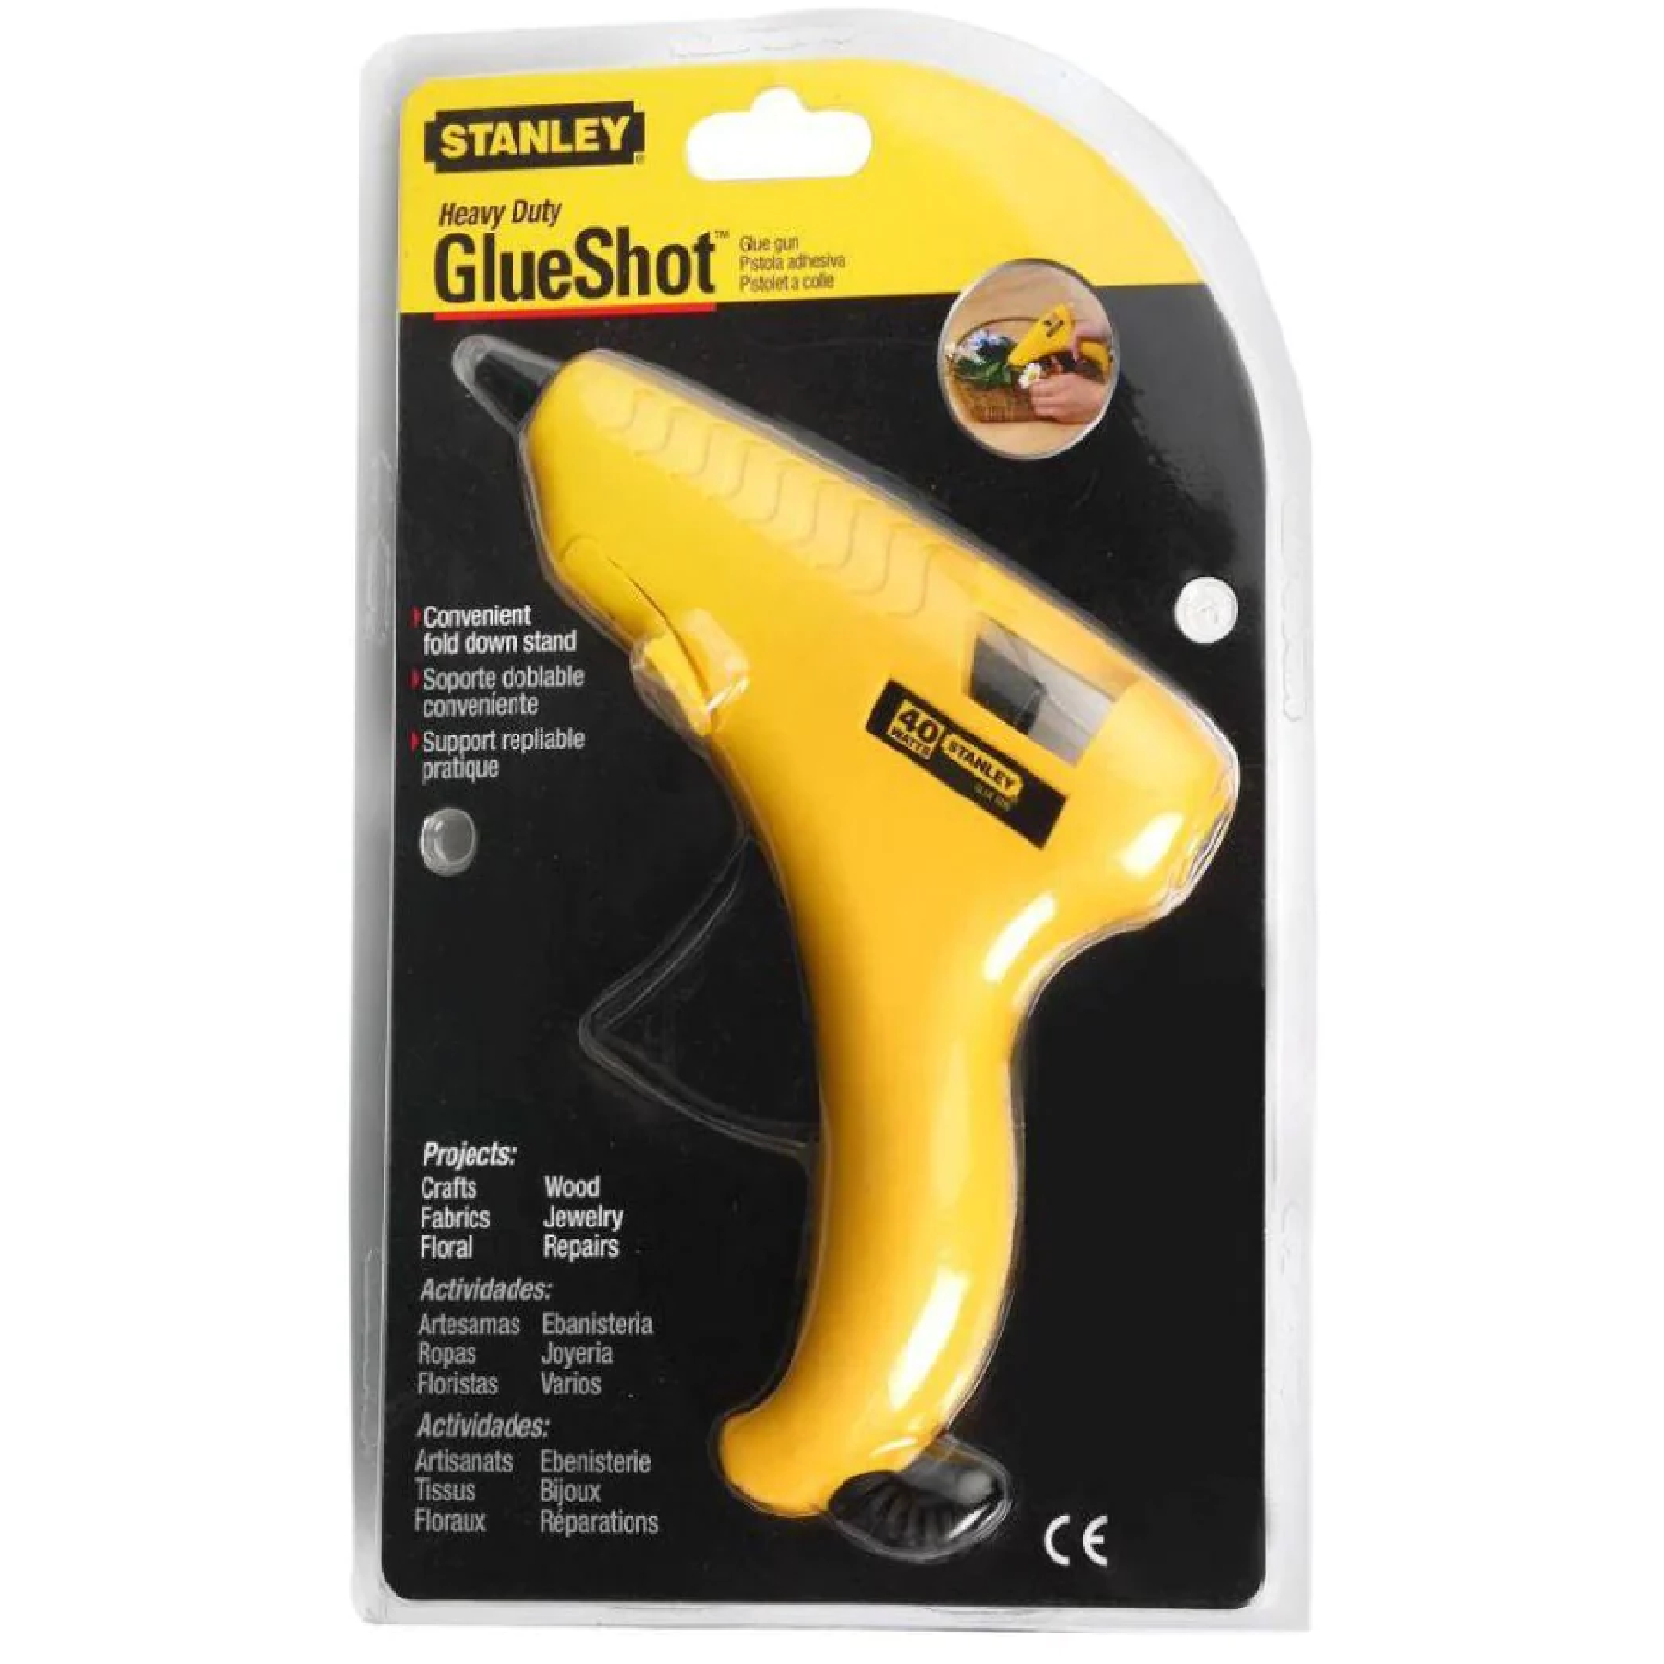 Stanley 69-GR20C, GluePro, Trigger Feed Hot Melt Glue Gun